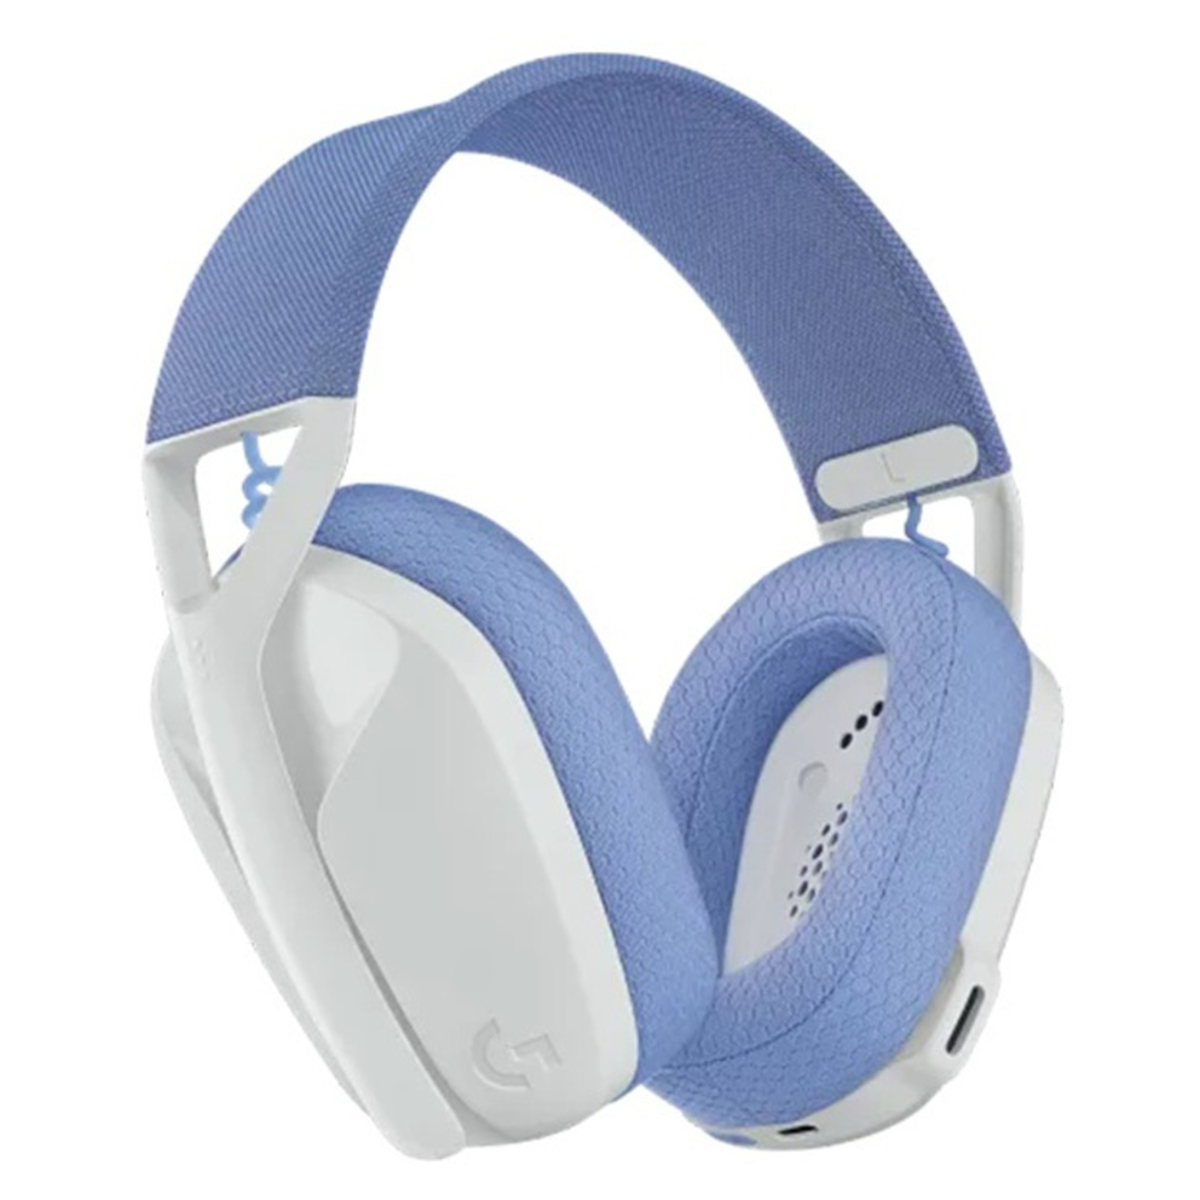 G435 LIGHTSPEED Wireless Gaming Headset - White slika proizvoda Front View 2 L